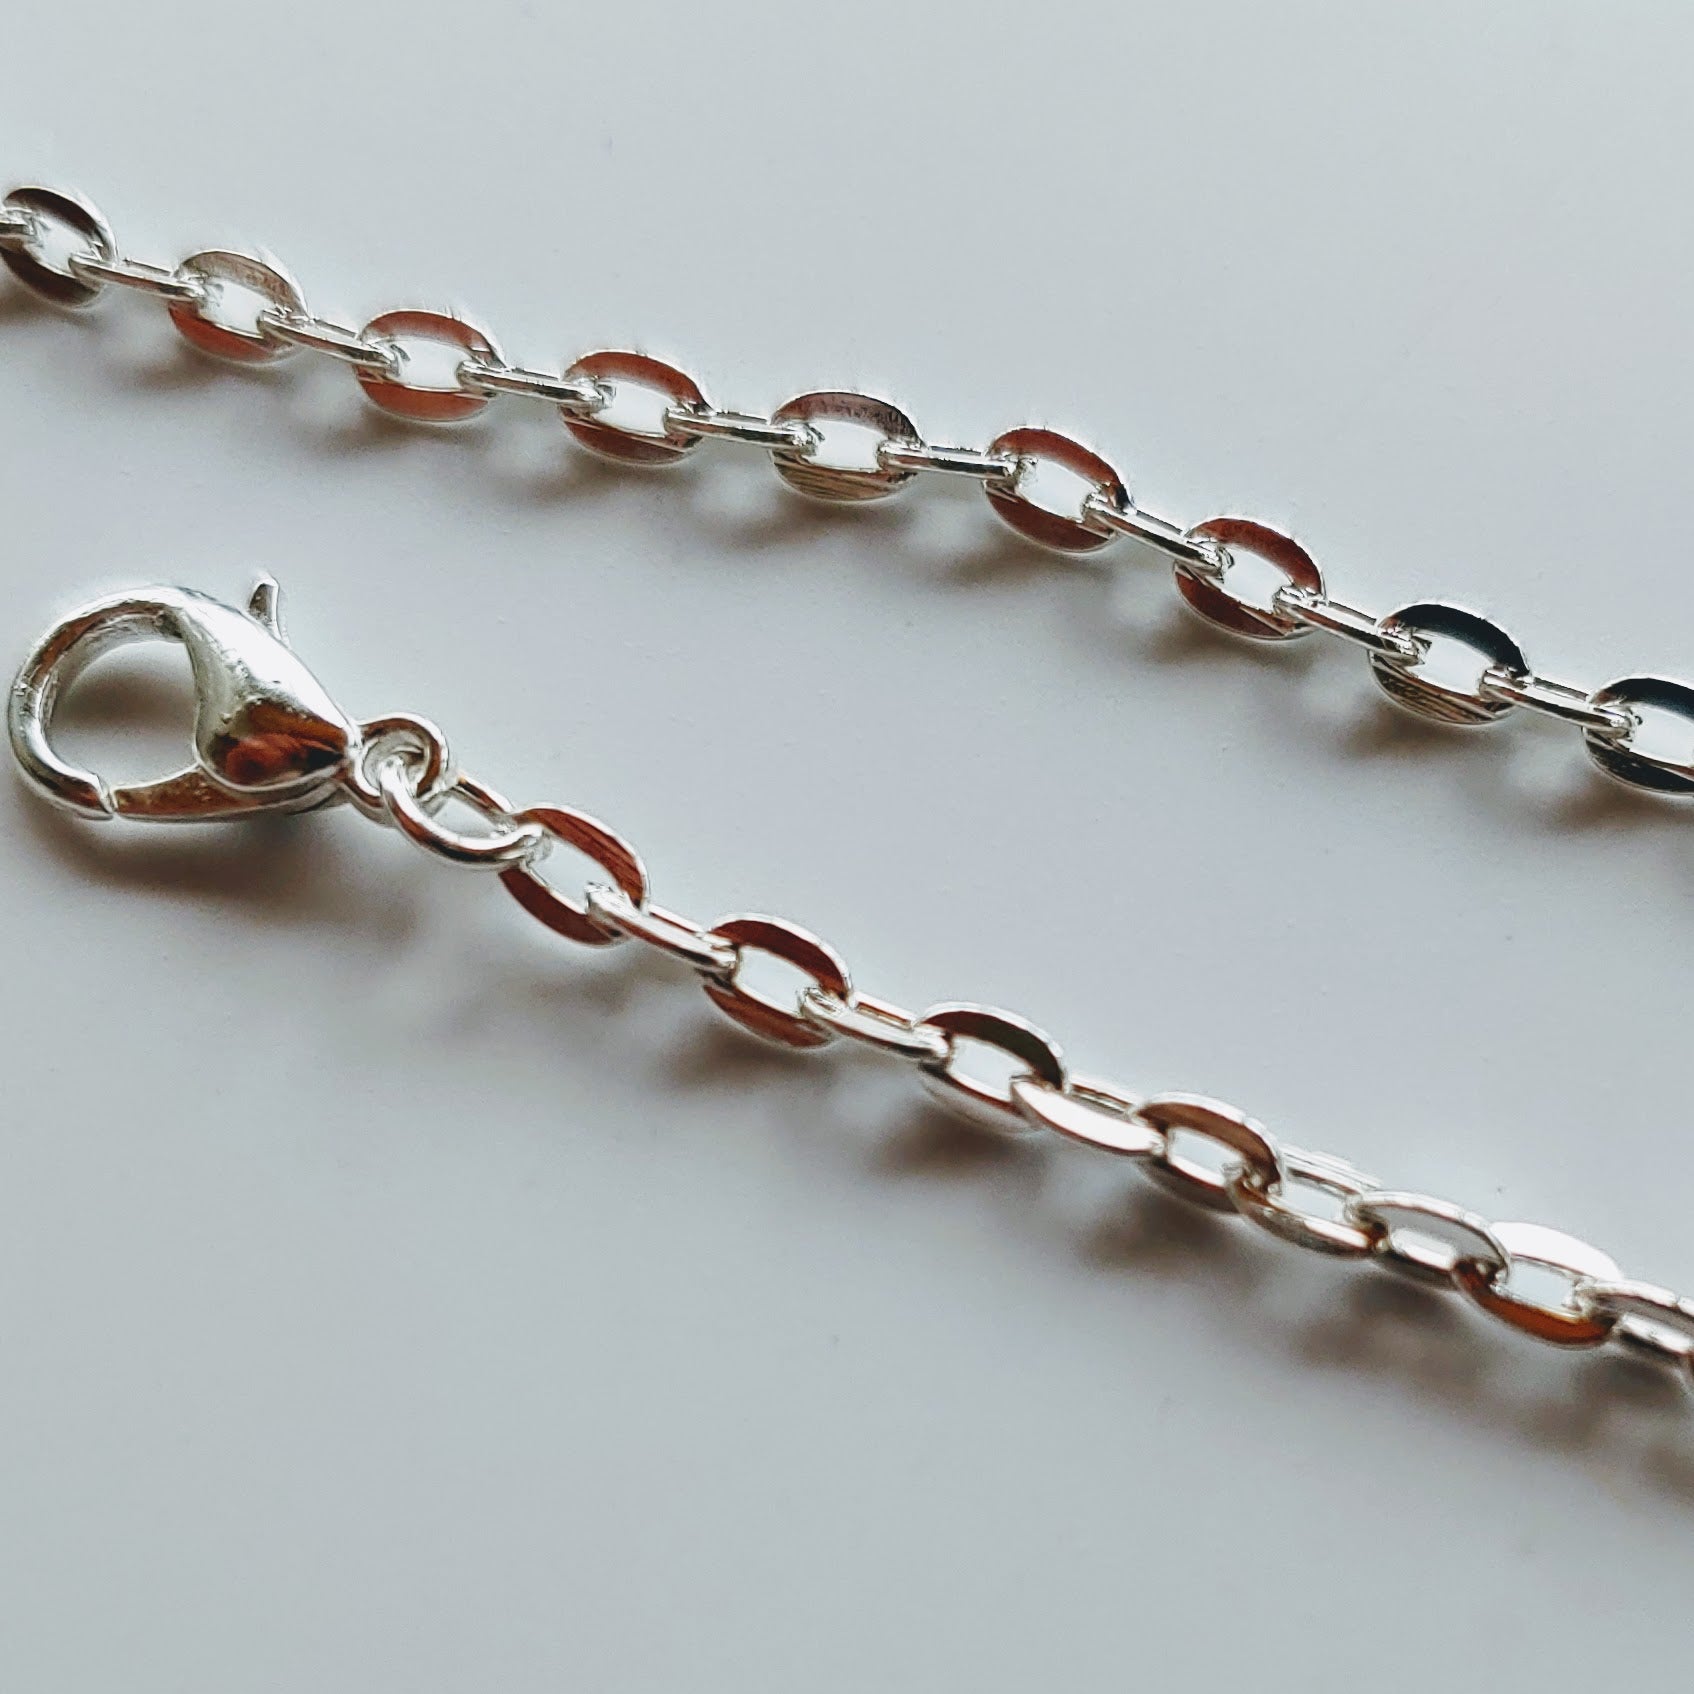 NELLA hinged clip necklace shorteners